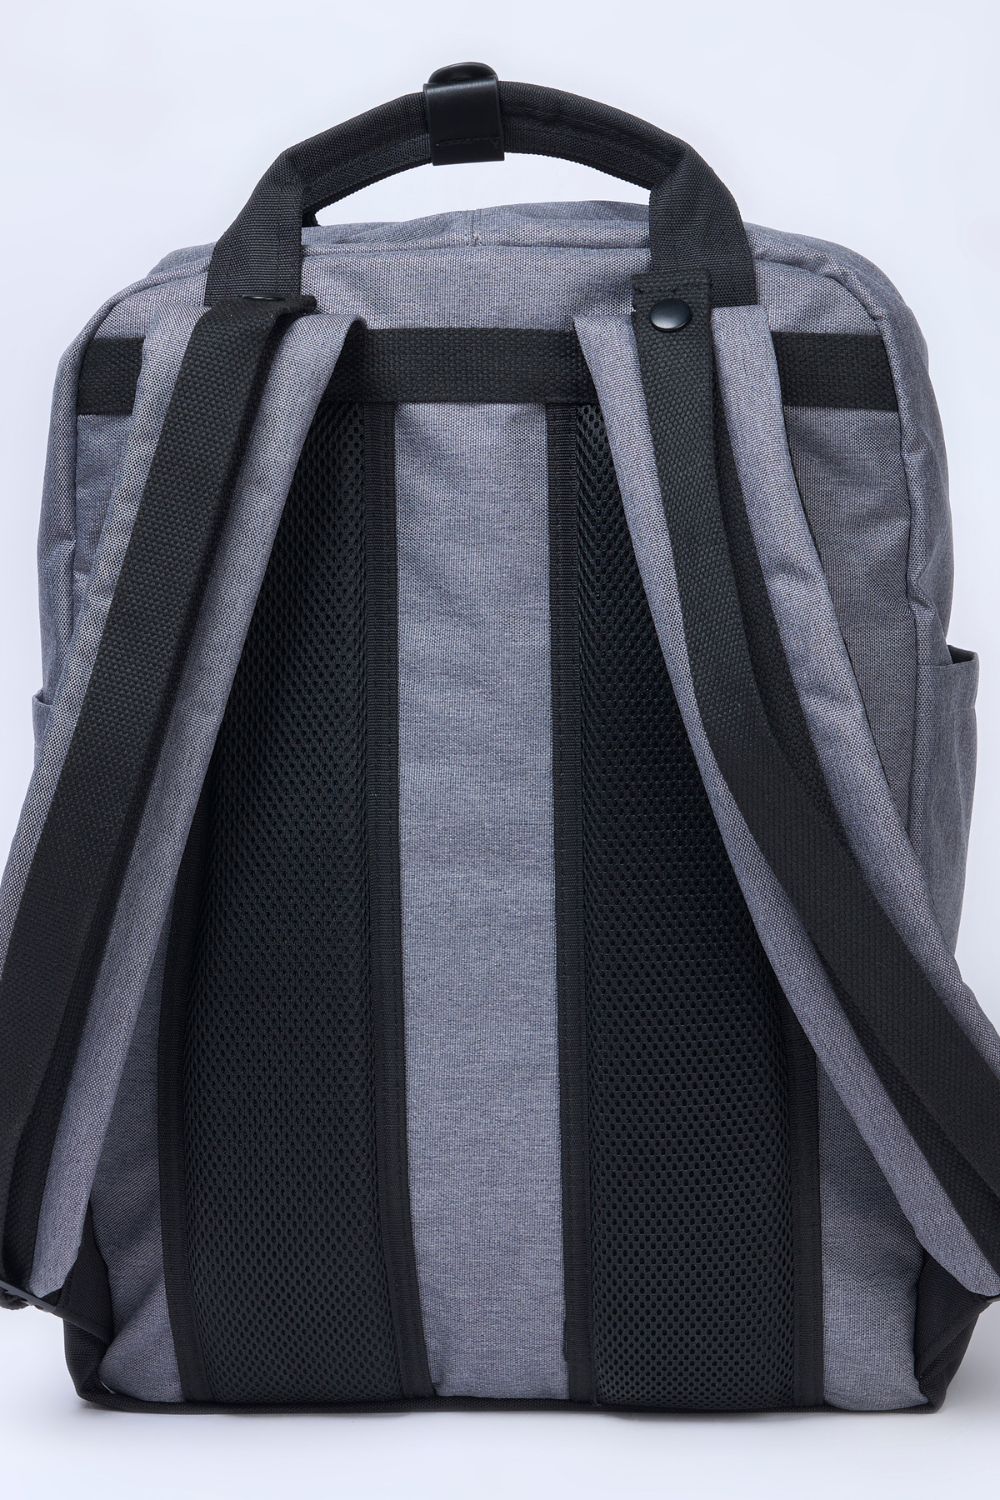 Grey Bagpack  Maxzone Clothing   